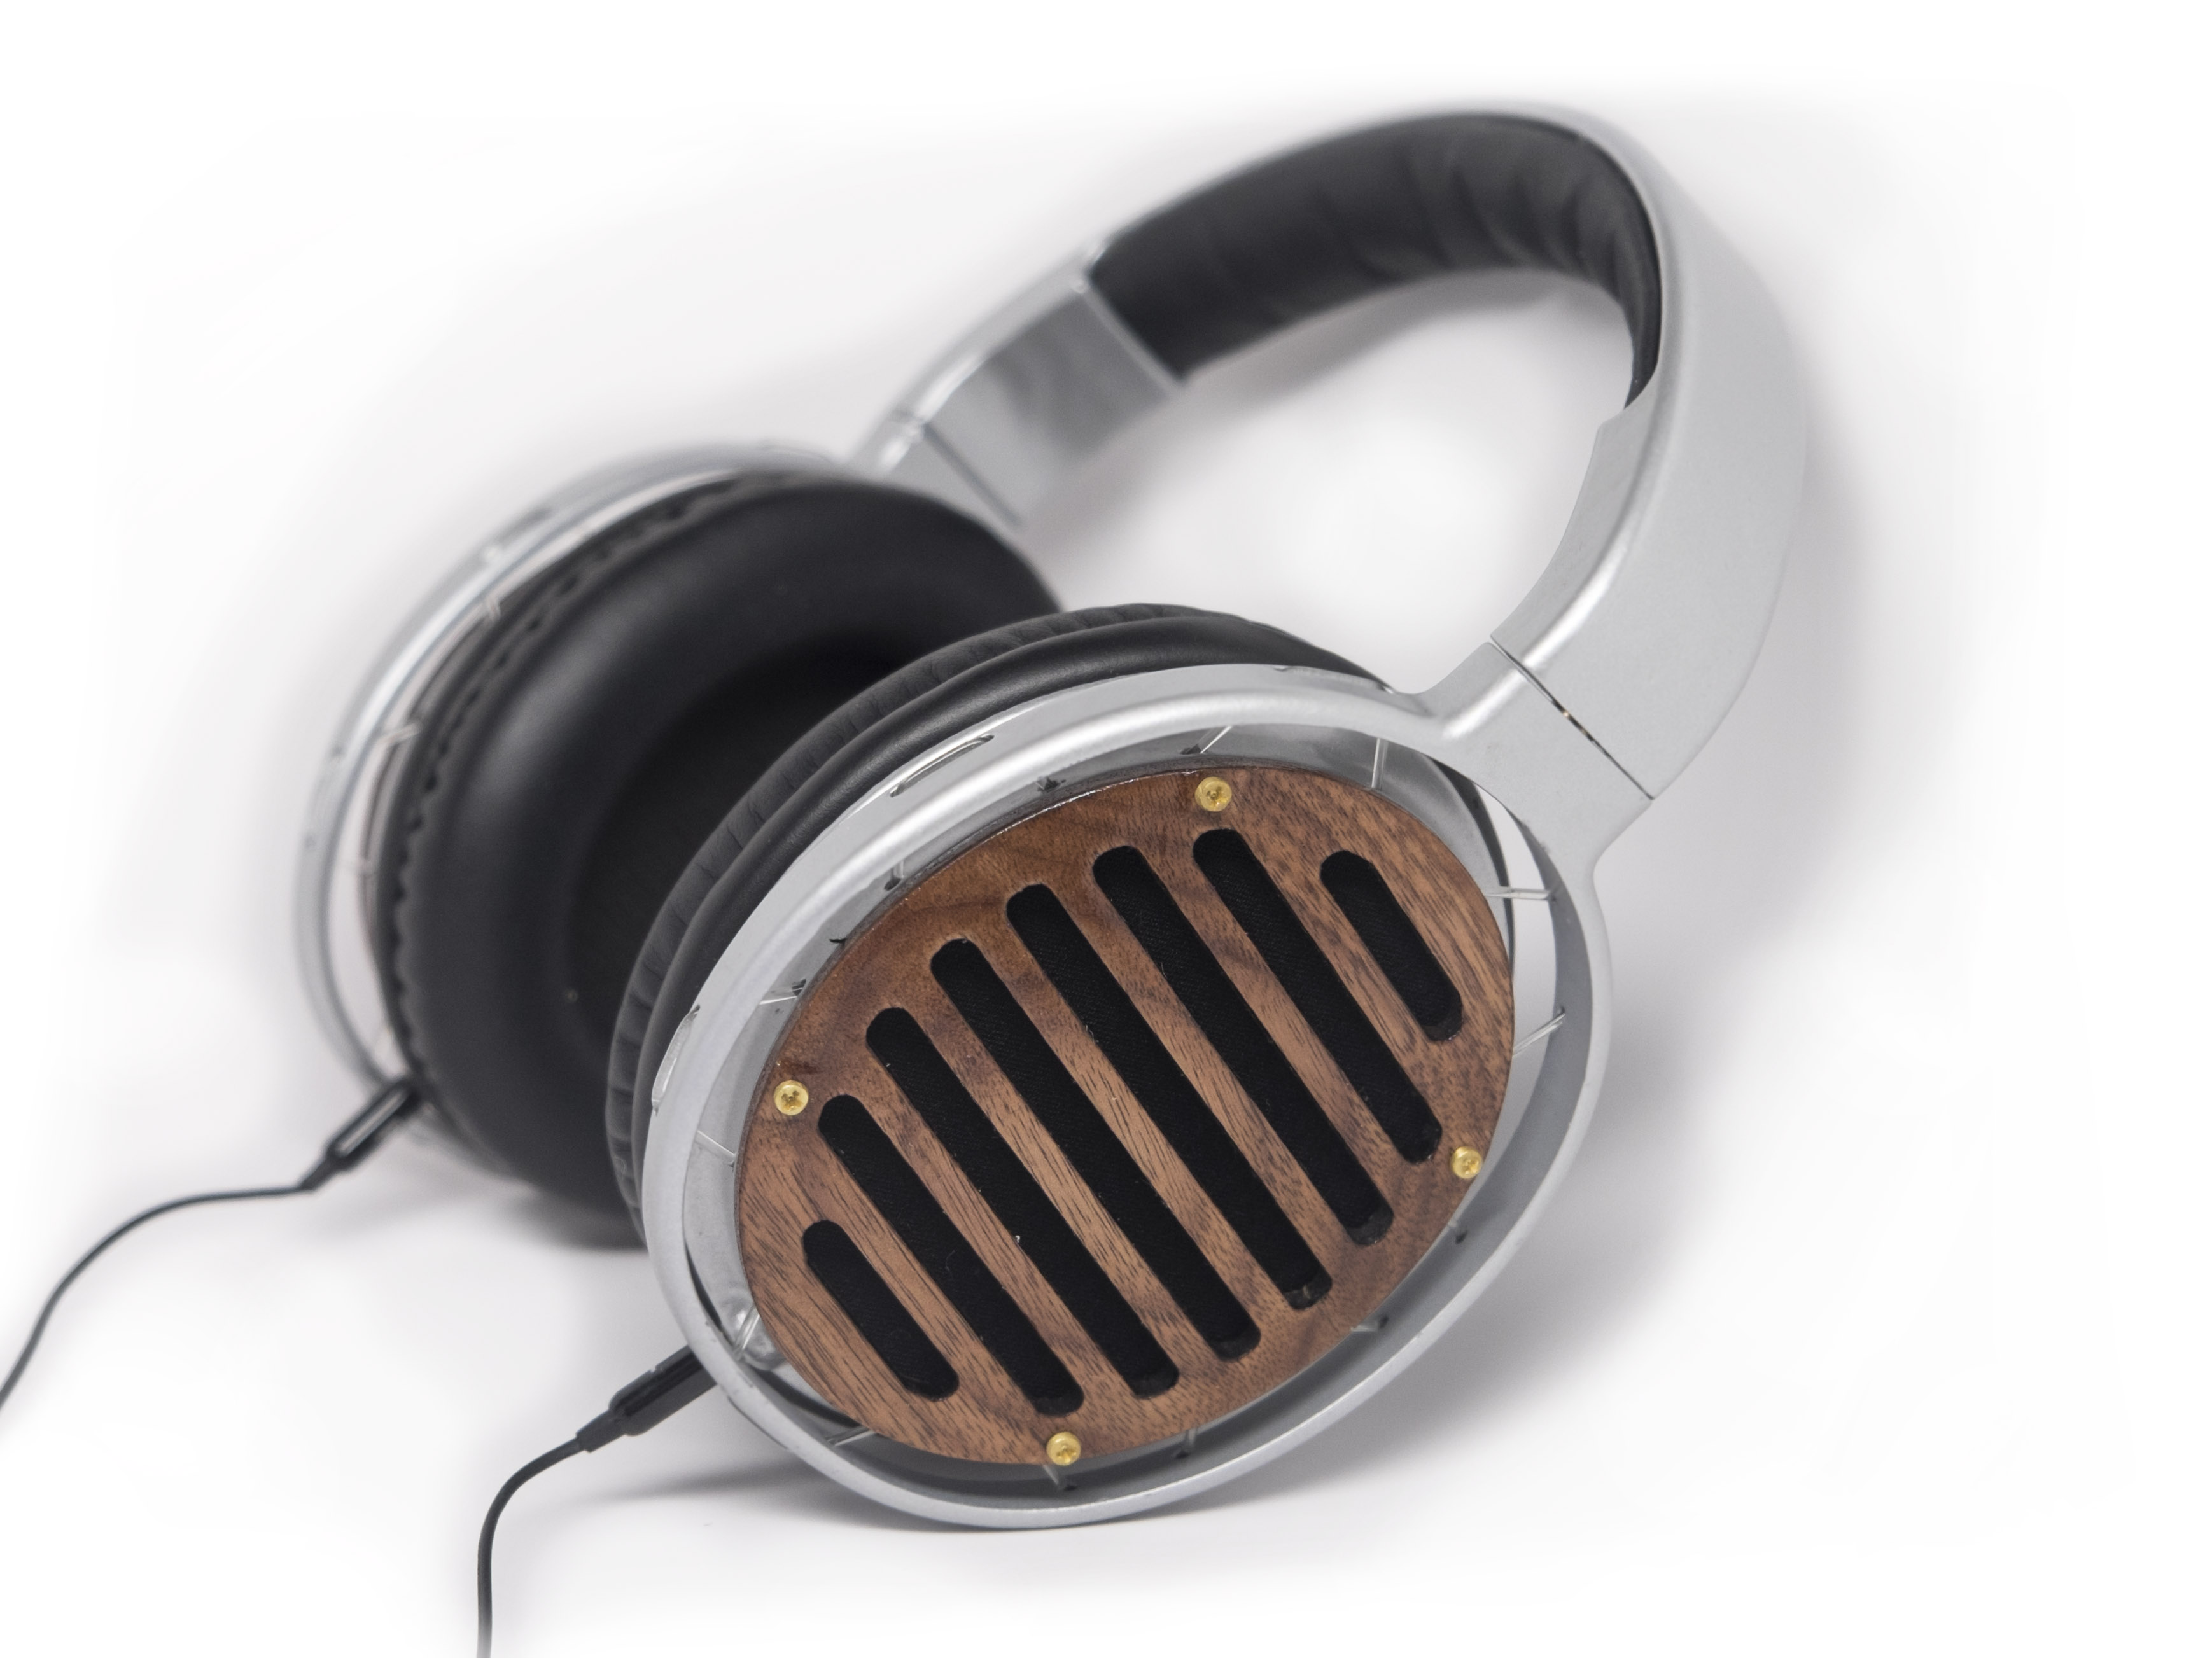 Innovative Headphones Offer Premium Sound Experience, Launches Kickstarter Campaign